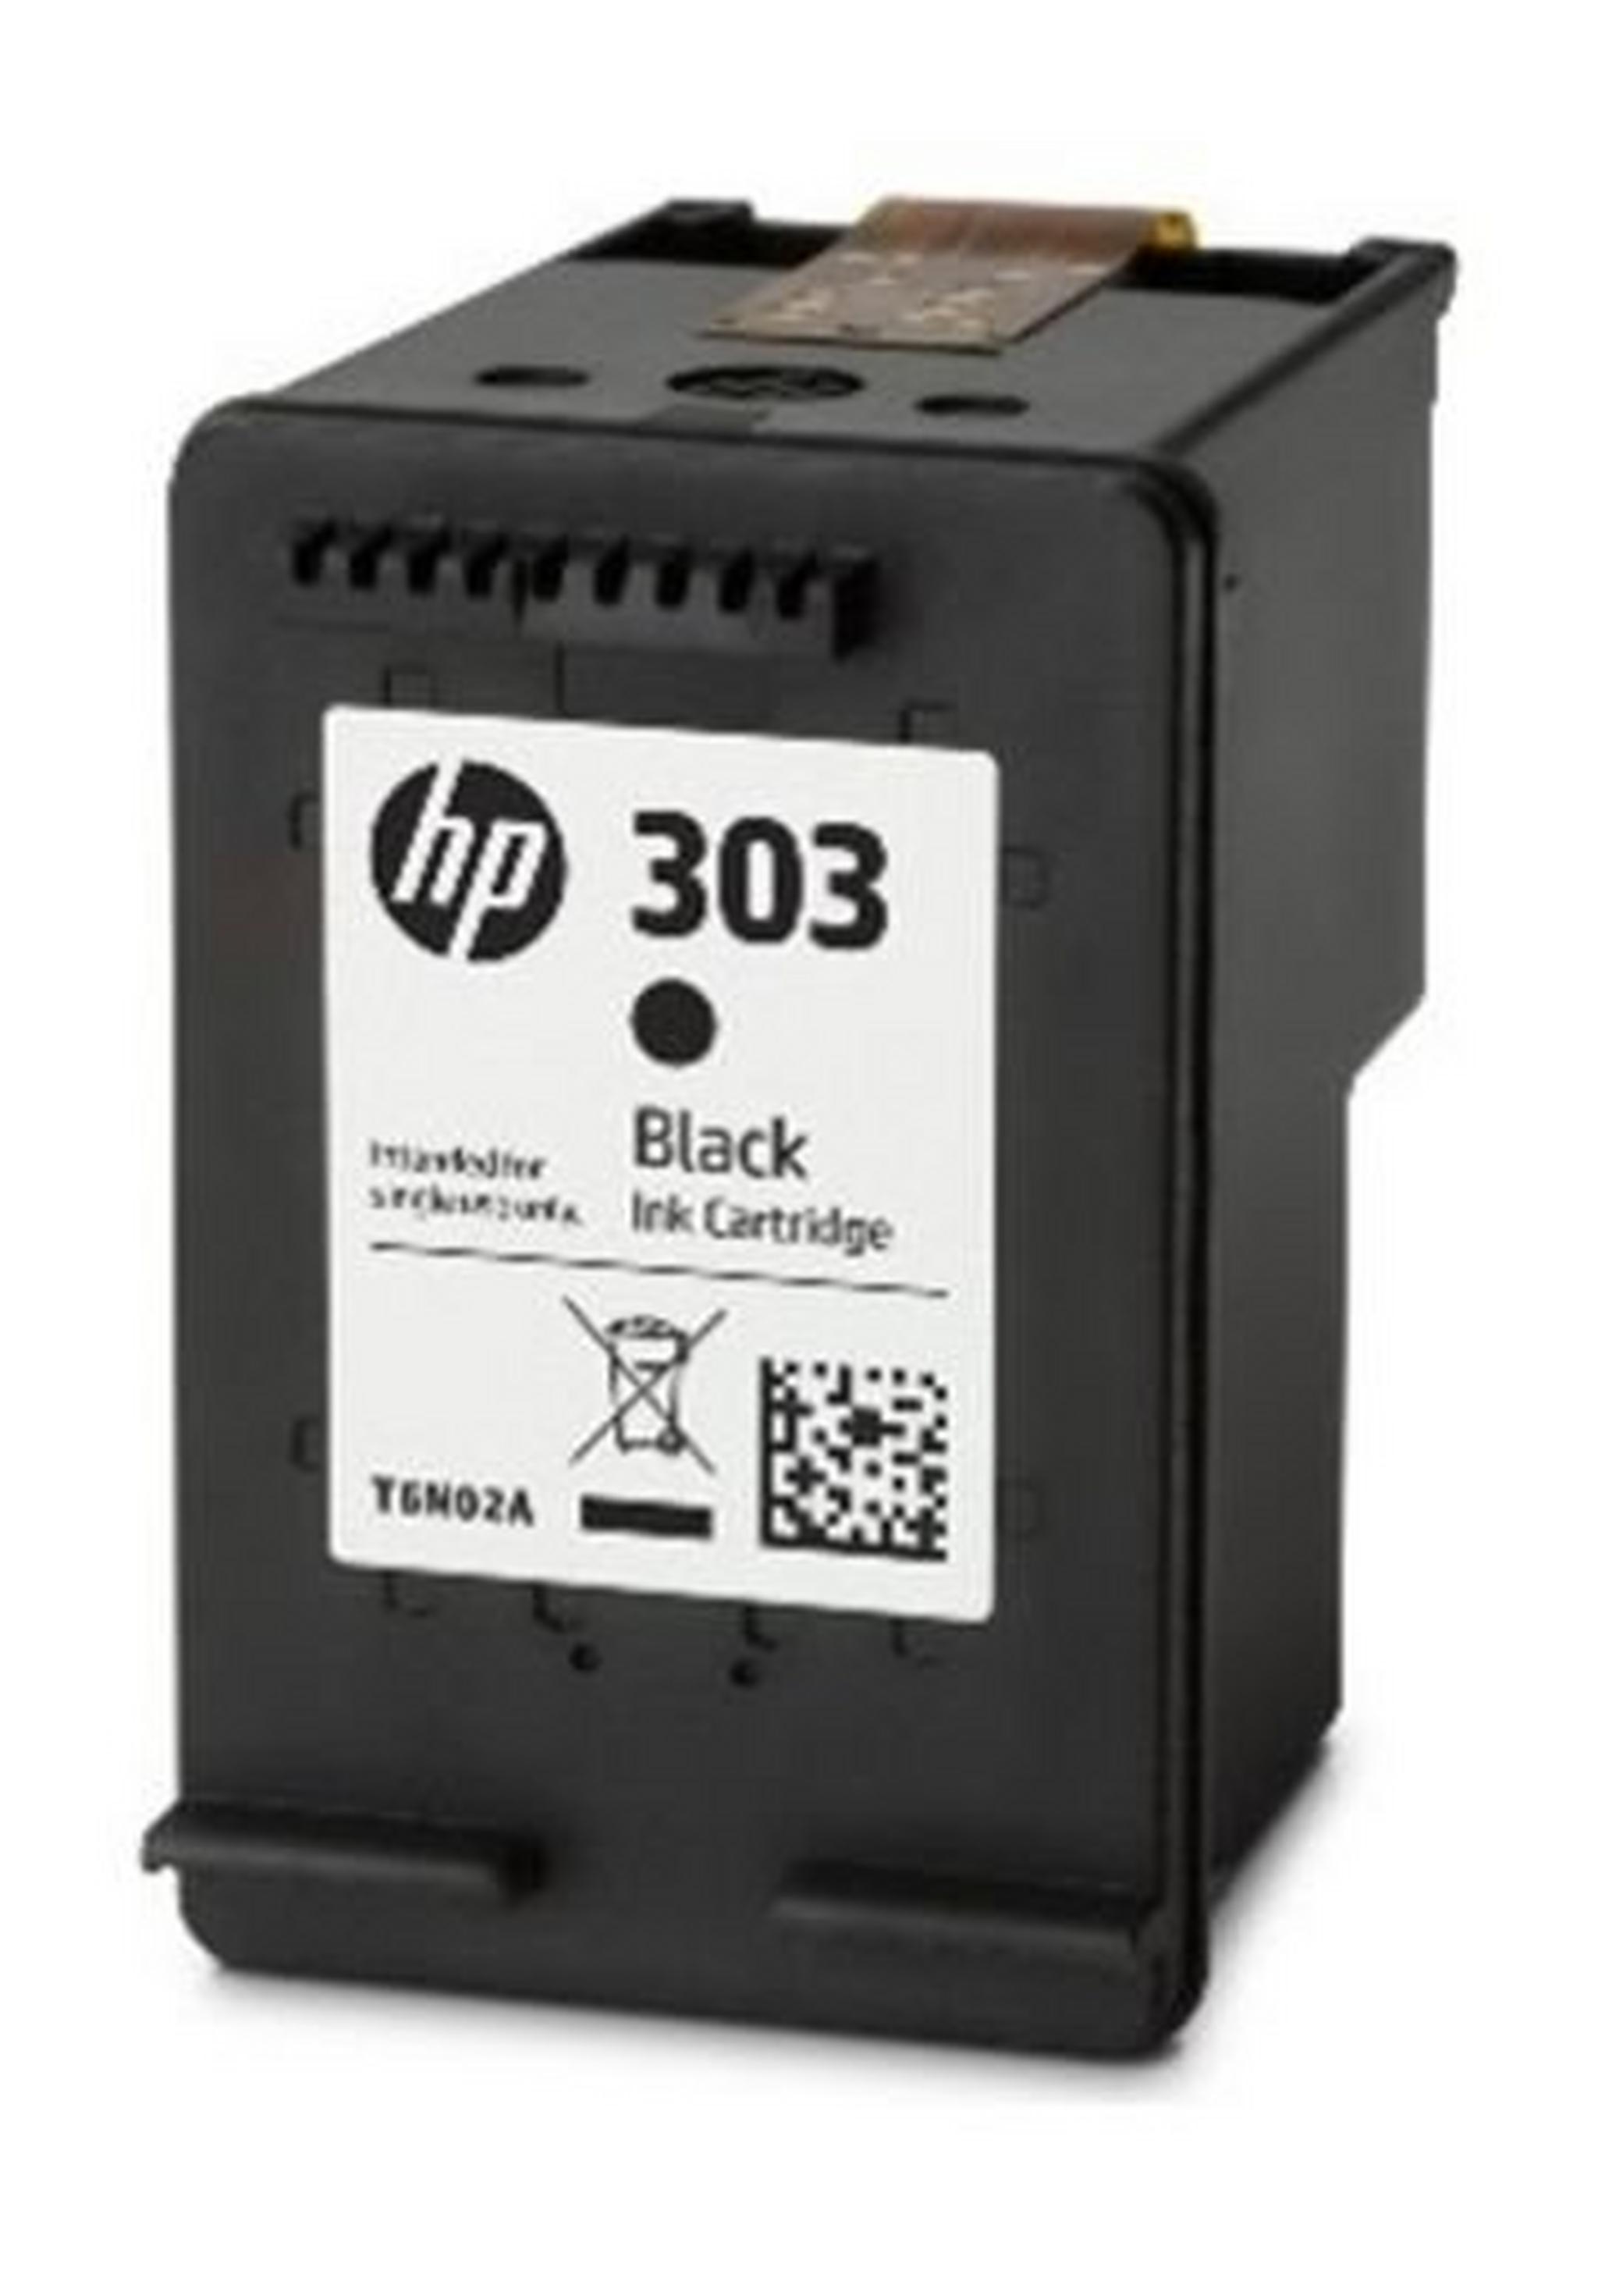 HP Tango X 303 Black Ink